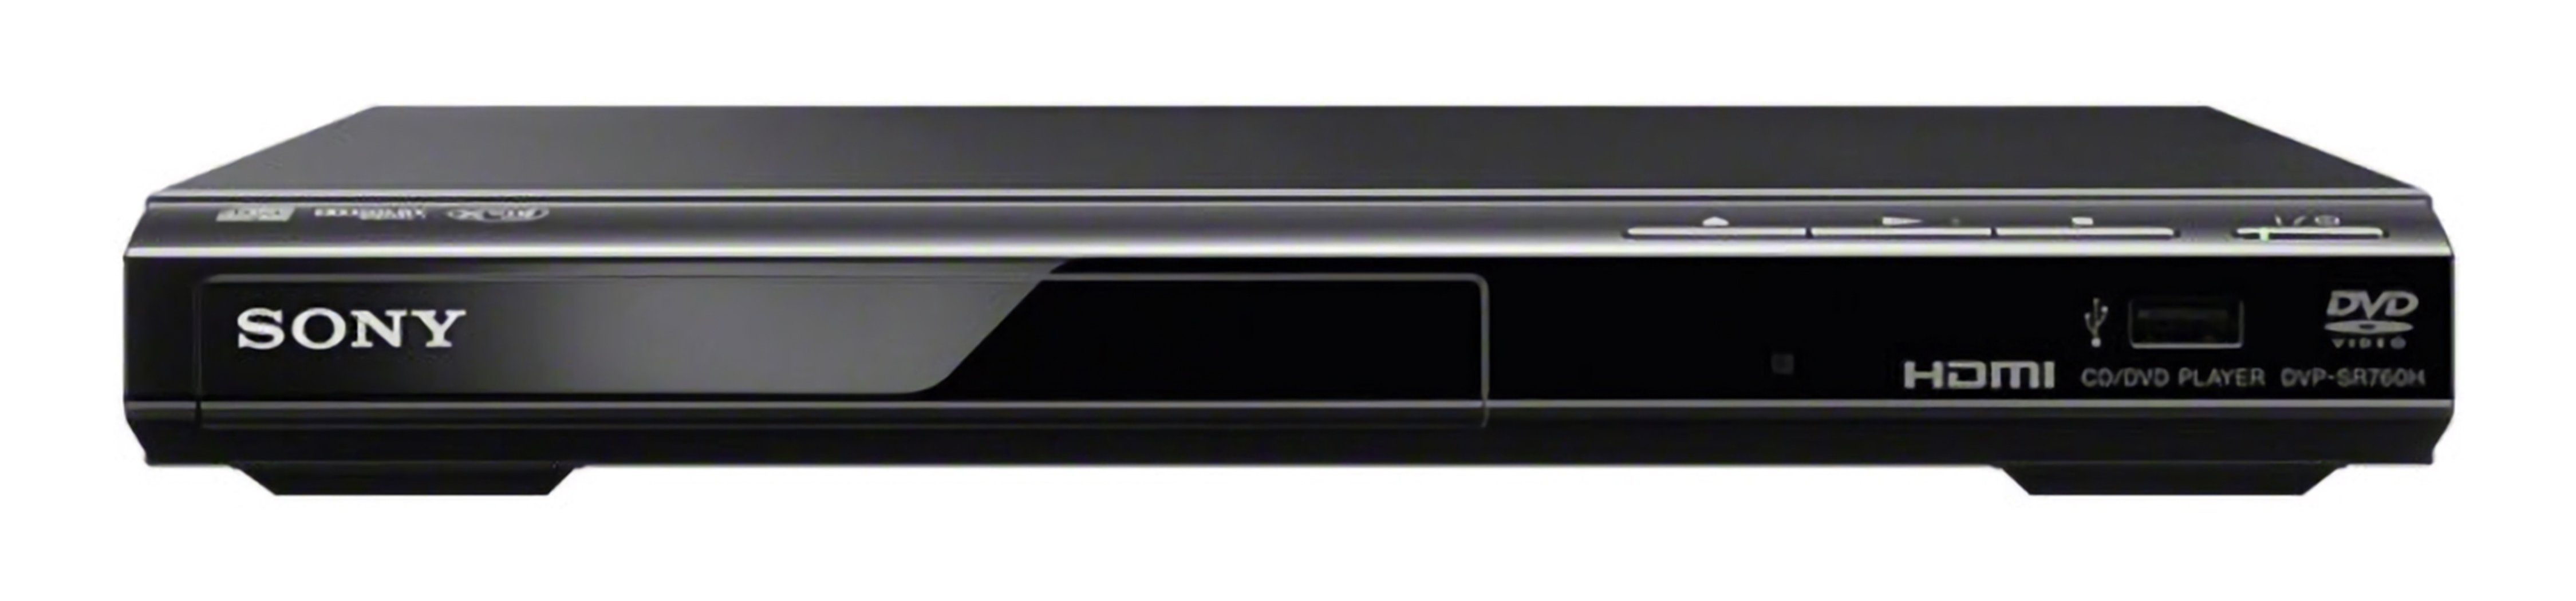 HD) DVP-SR760H DVD-Player (Full Sony